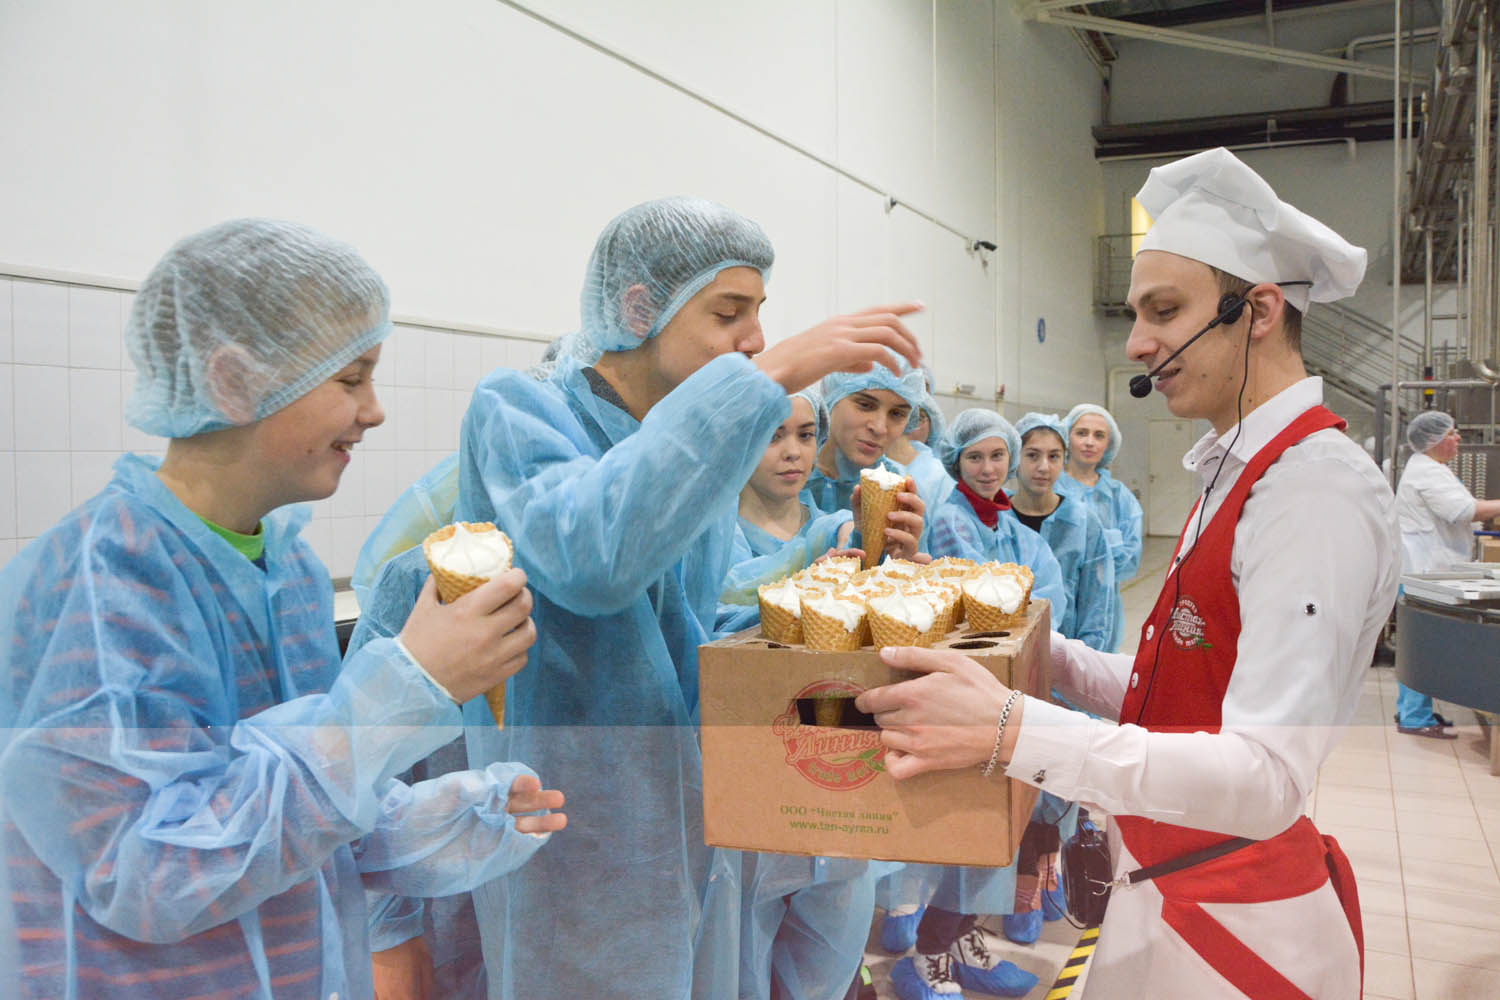 Фабрика мороженого отзывы. Фабрика мороженого Петрохолод Санкт-Петербург экскурсии. Фабрика мороженого экскурсия для детей. Экскурсия на завод мороженого. Фабрика мороженого в Питере экскурсия.